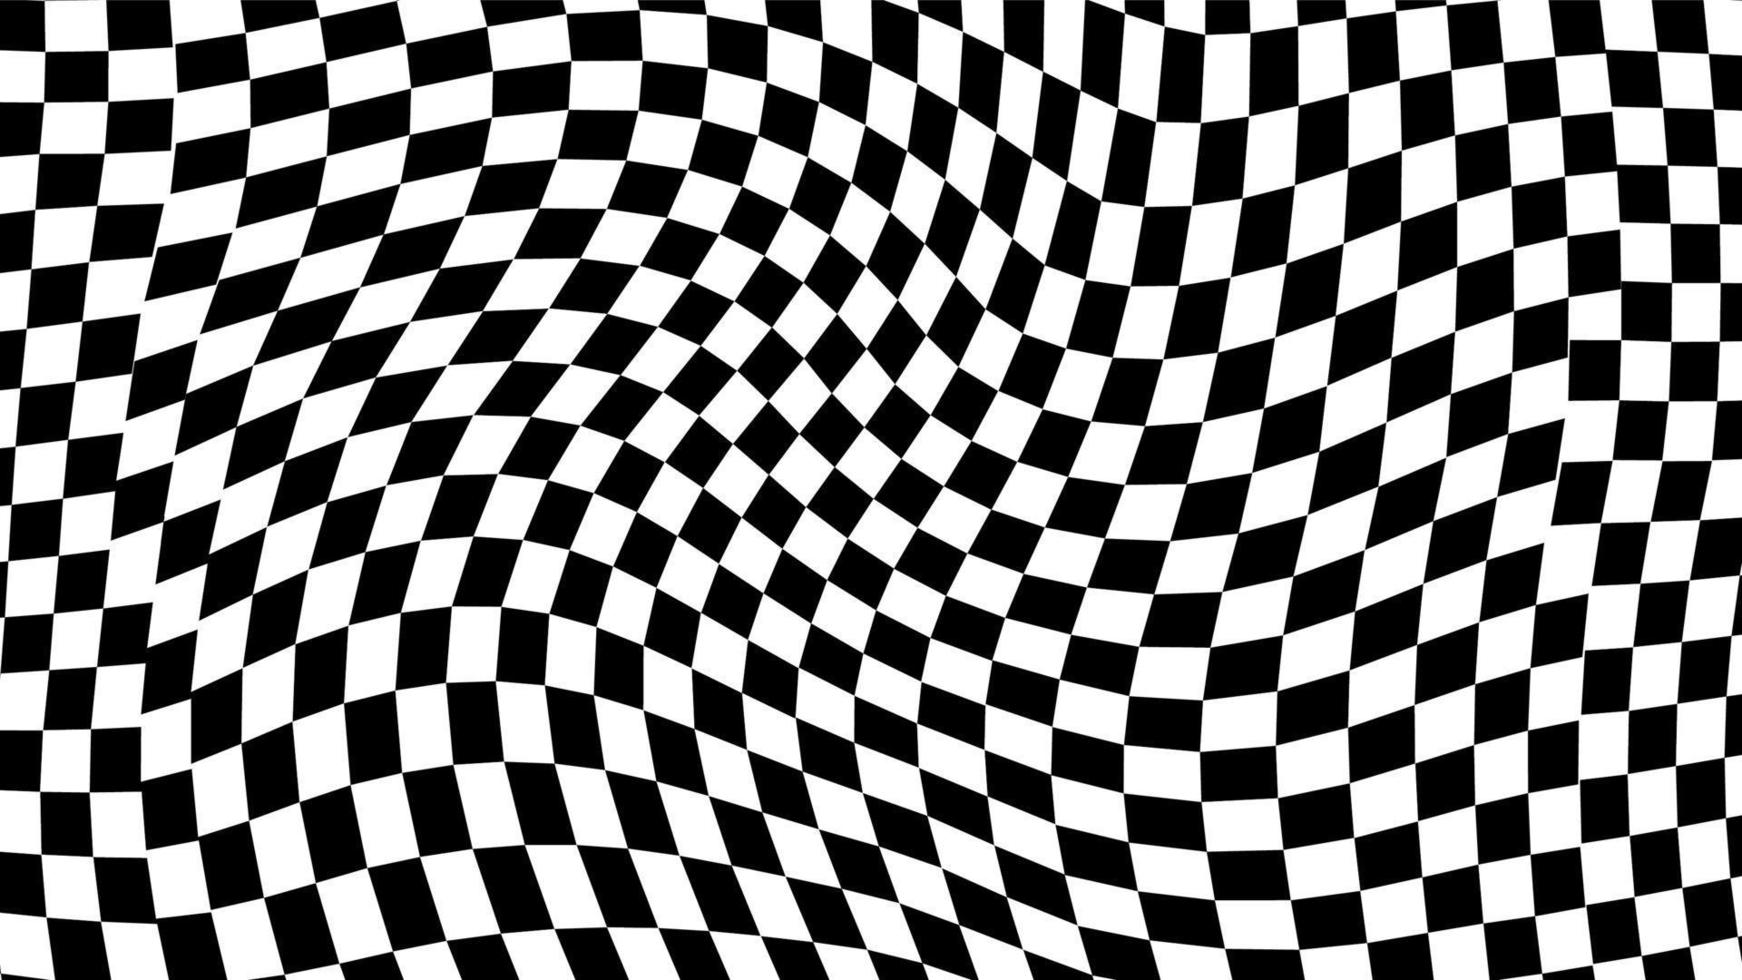 groovy retromönsterbakgrund i psykedelisk rutig bakgrundsstil. ett schackbräde i en minimalistisk abstrakt design med en estetisk 60-70-talskänsla. hippie stil y2k. funky print vektorillustration vektor